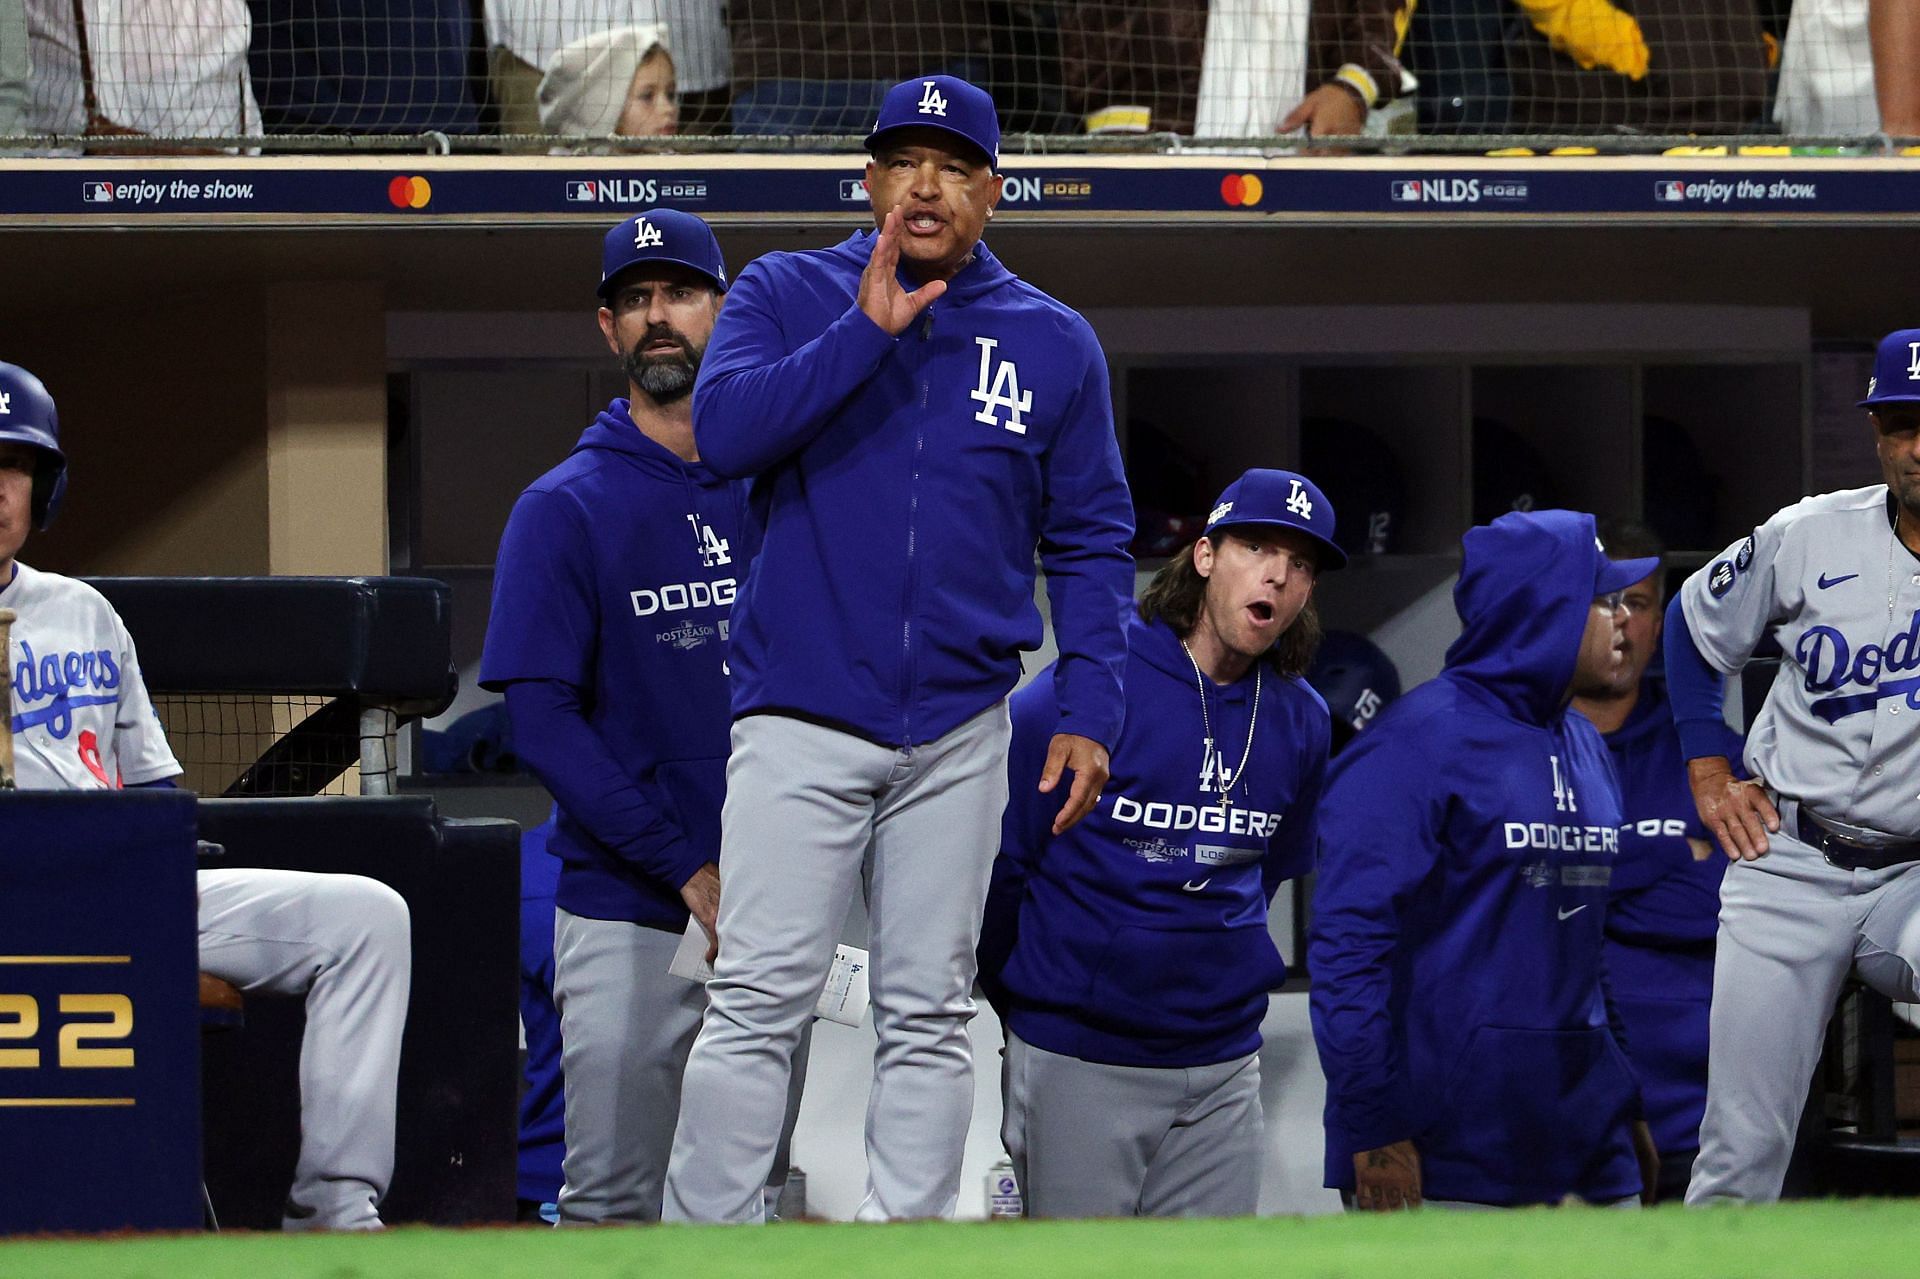 LA Dodgers fans agonize over team's elimination from postseason as